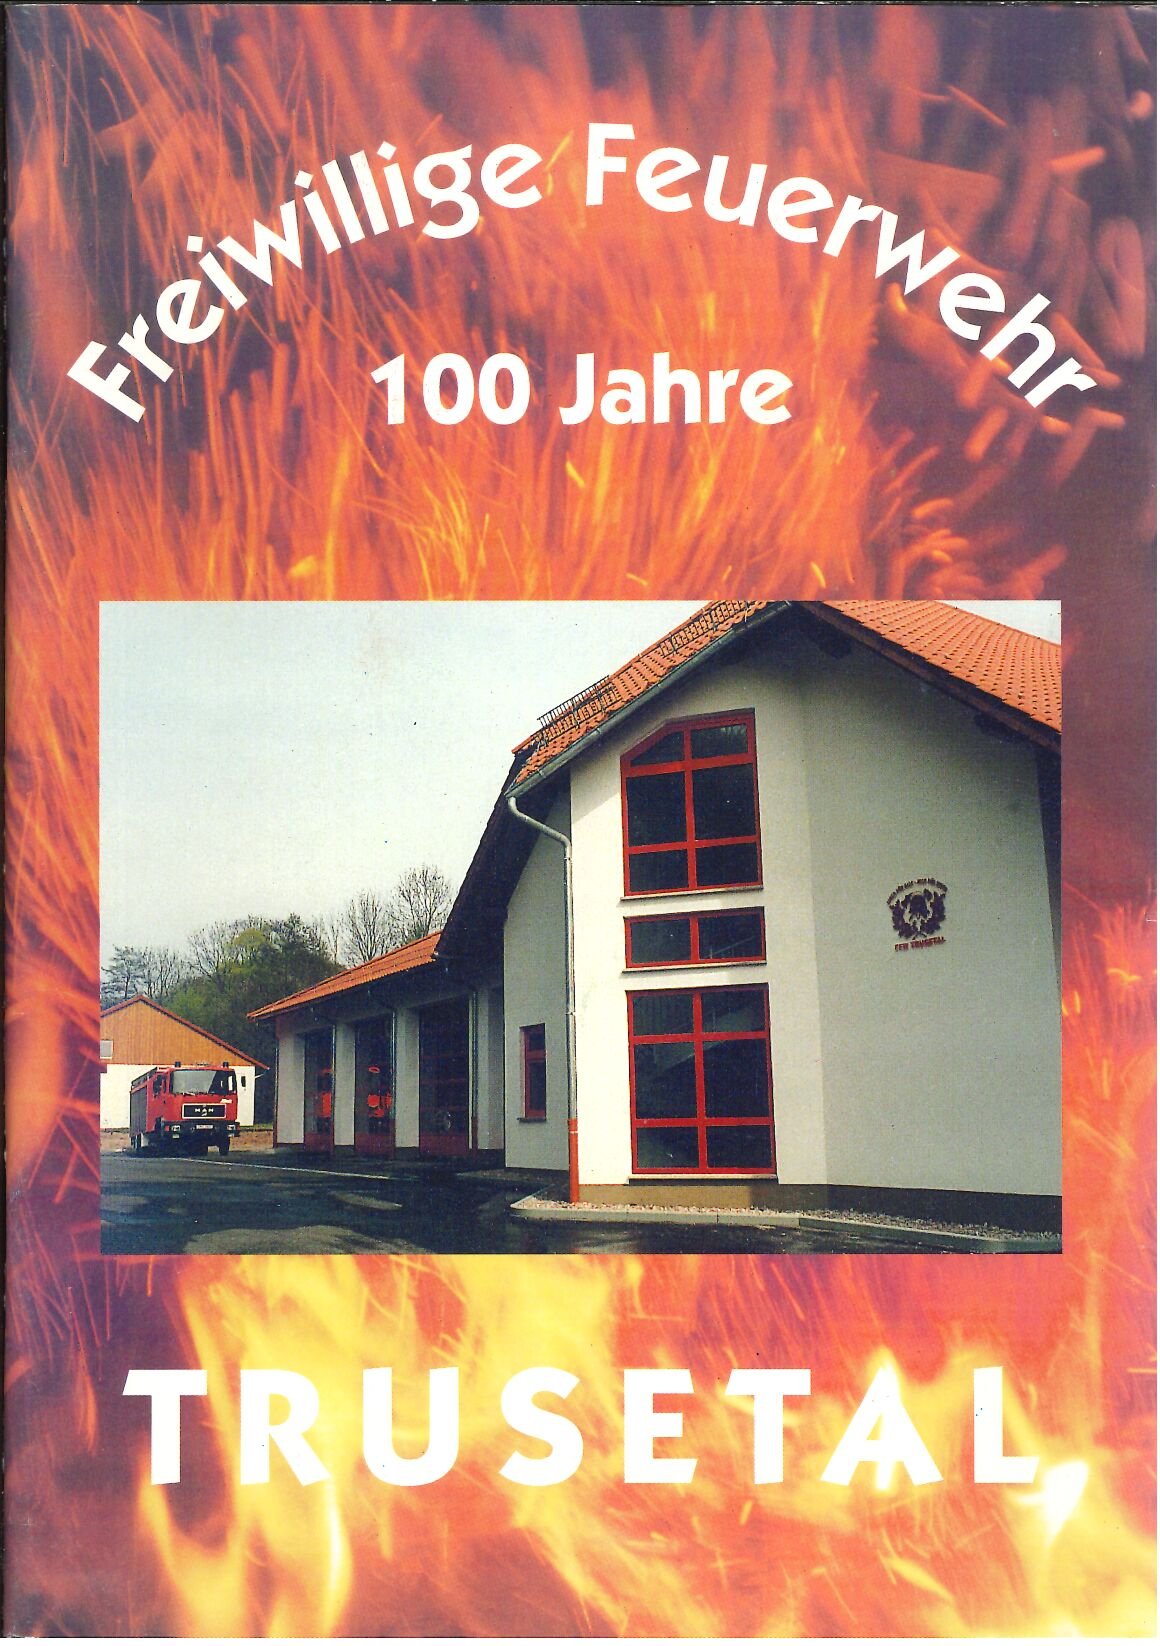 Festschrift FF Trusetal (Feuerwehrmuseum Grethen CC BY-NC-SA)